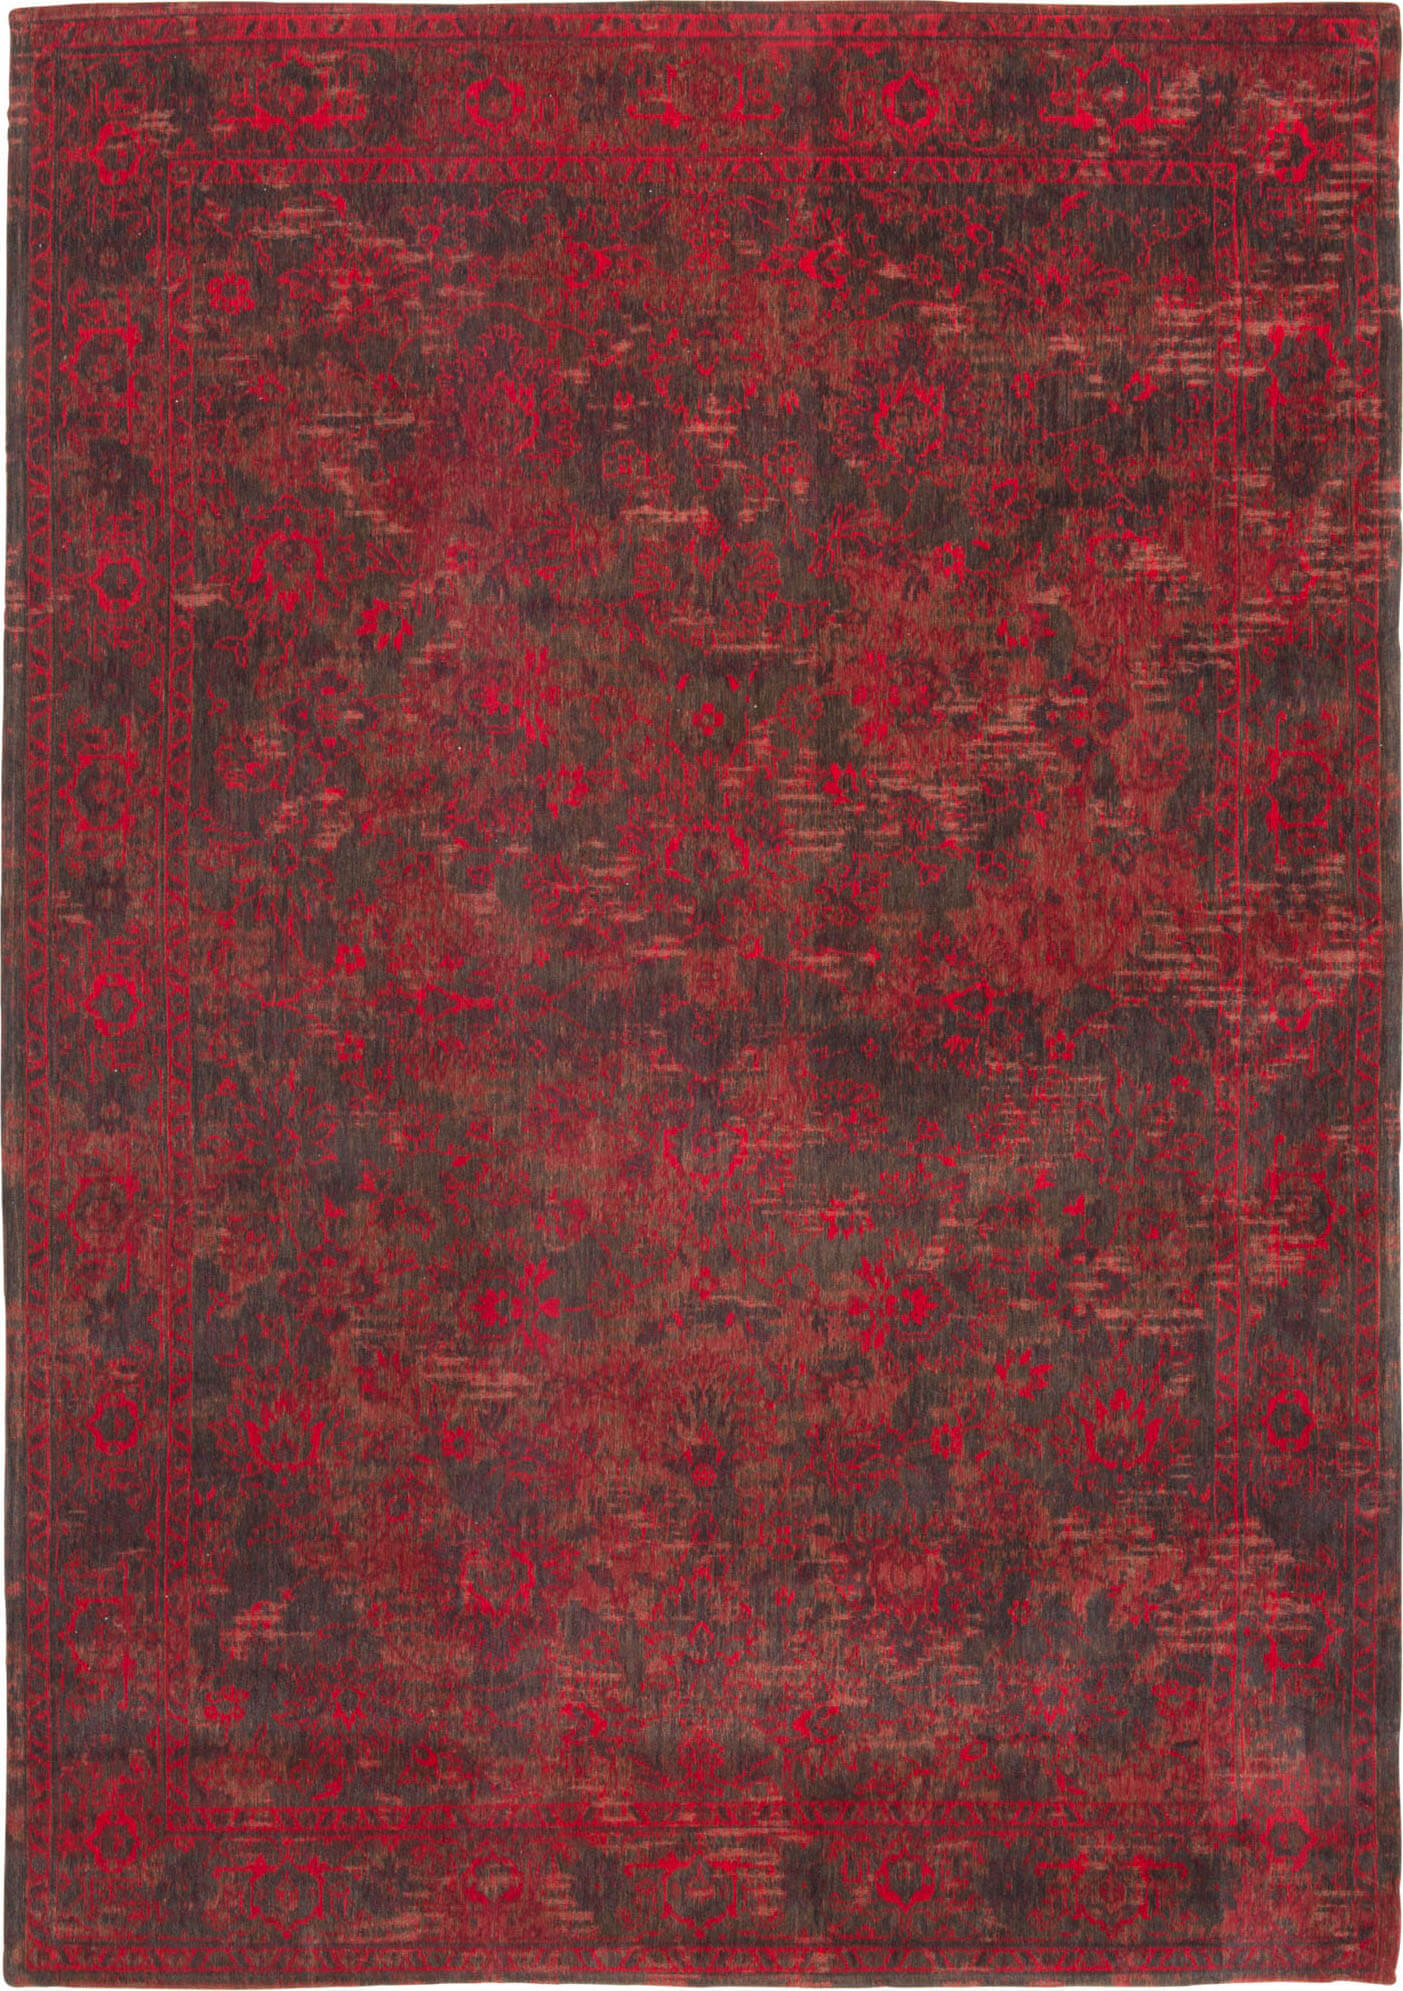 Grey Red Bright Persian Premium Rug ☞ Size: 7' 7" x 7' 7" (230 x 230 cm)